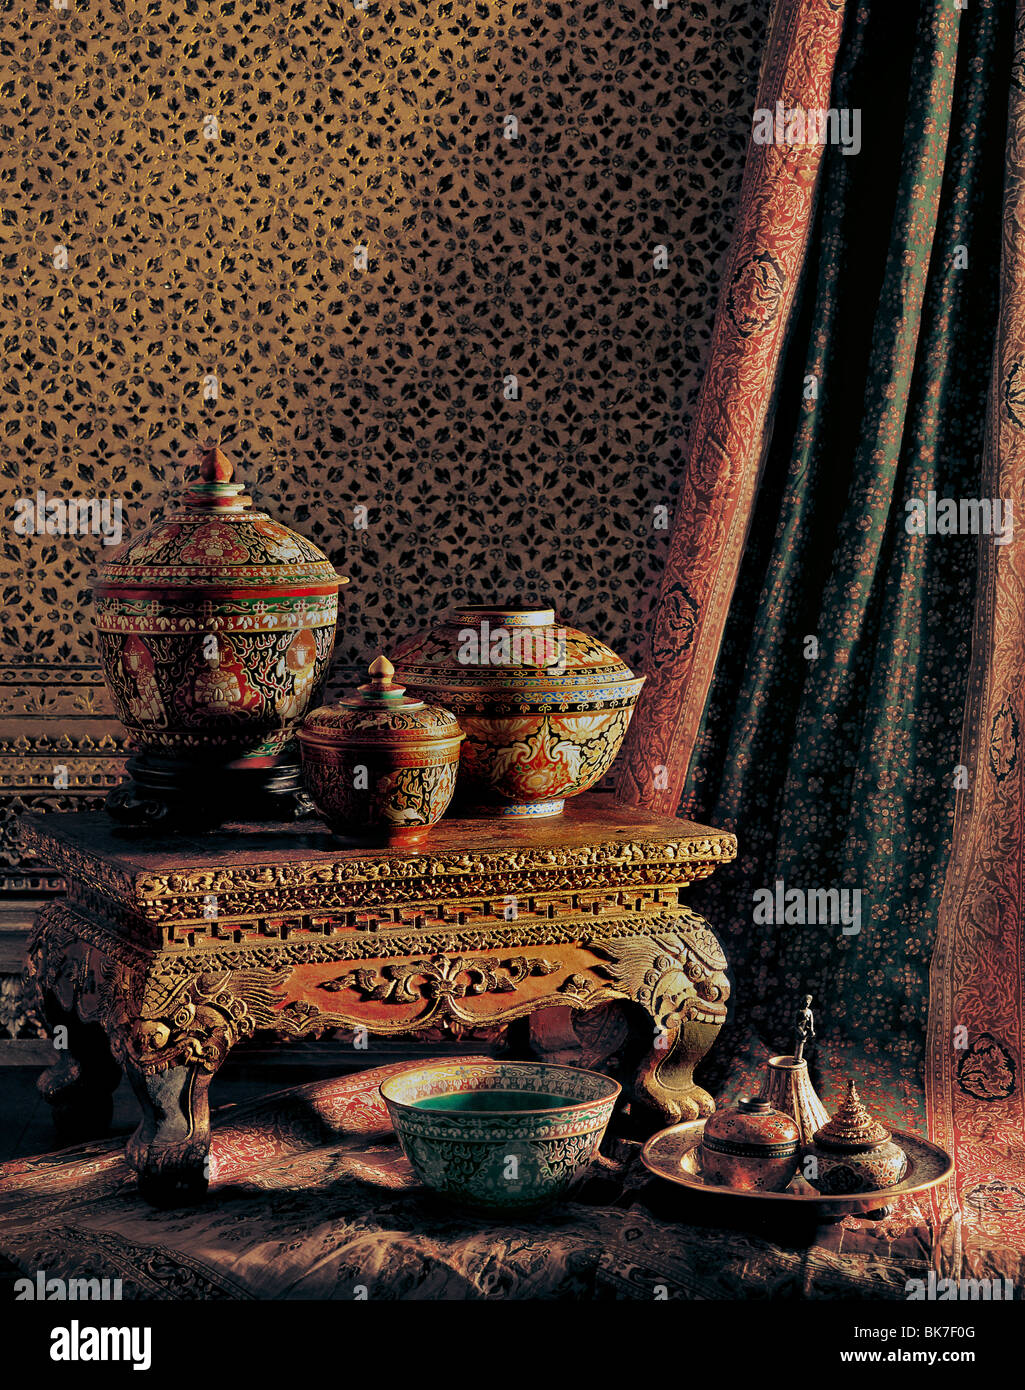 Bencharong wares from the Ayutthaya period, classic Thai furniture and textiles, Prasat Museum, Bangkok, Thailand Stock Photo